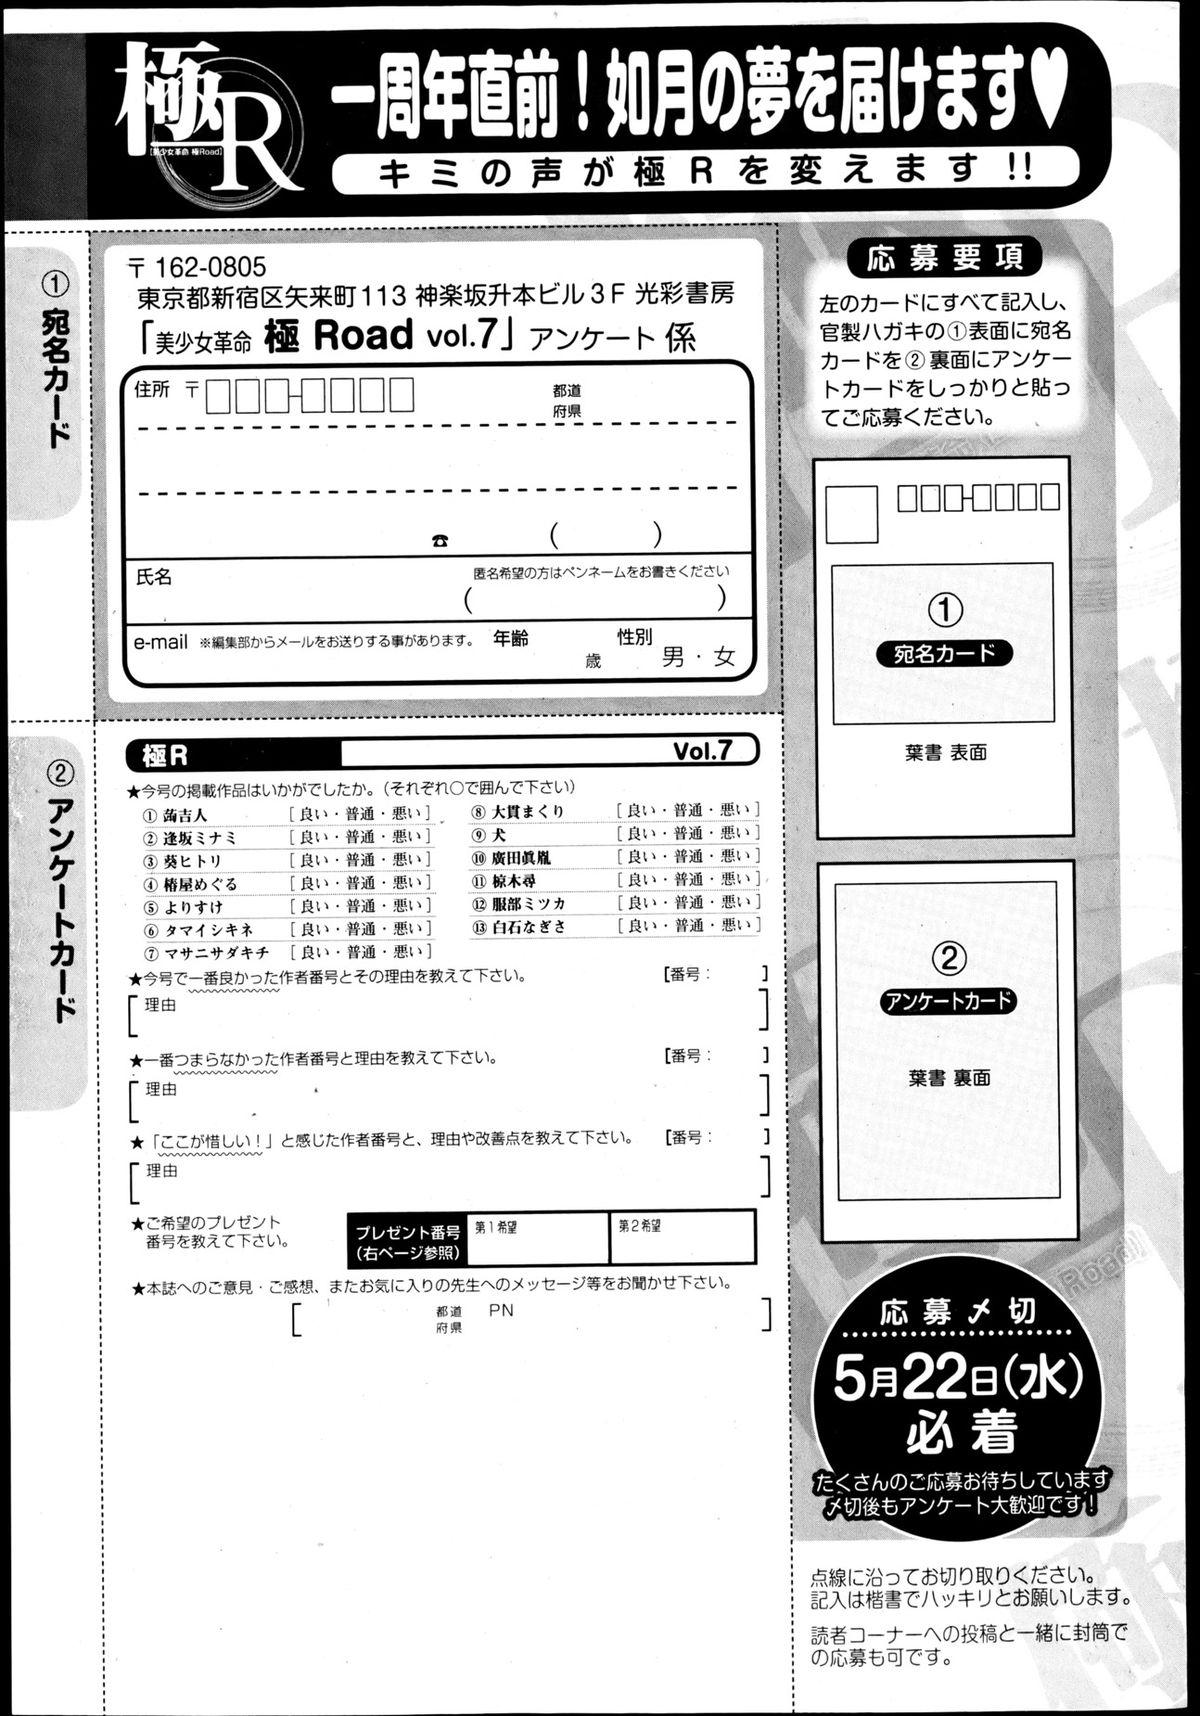 Bishoujo Kakumei KIWAME Road 2013-06 Vol.7 254